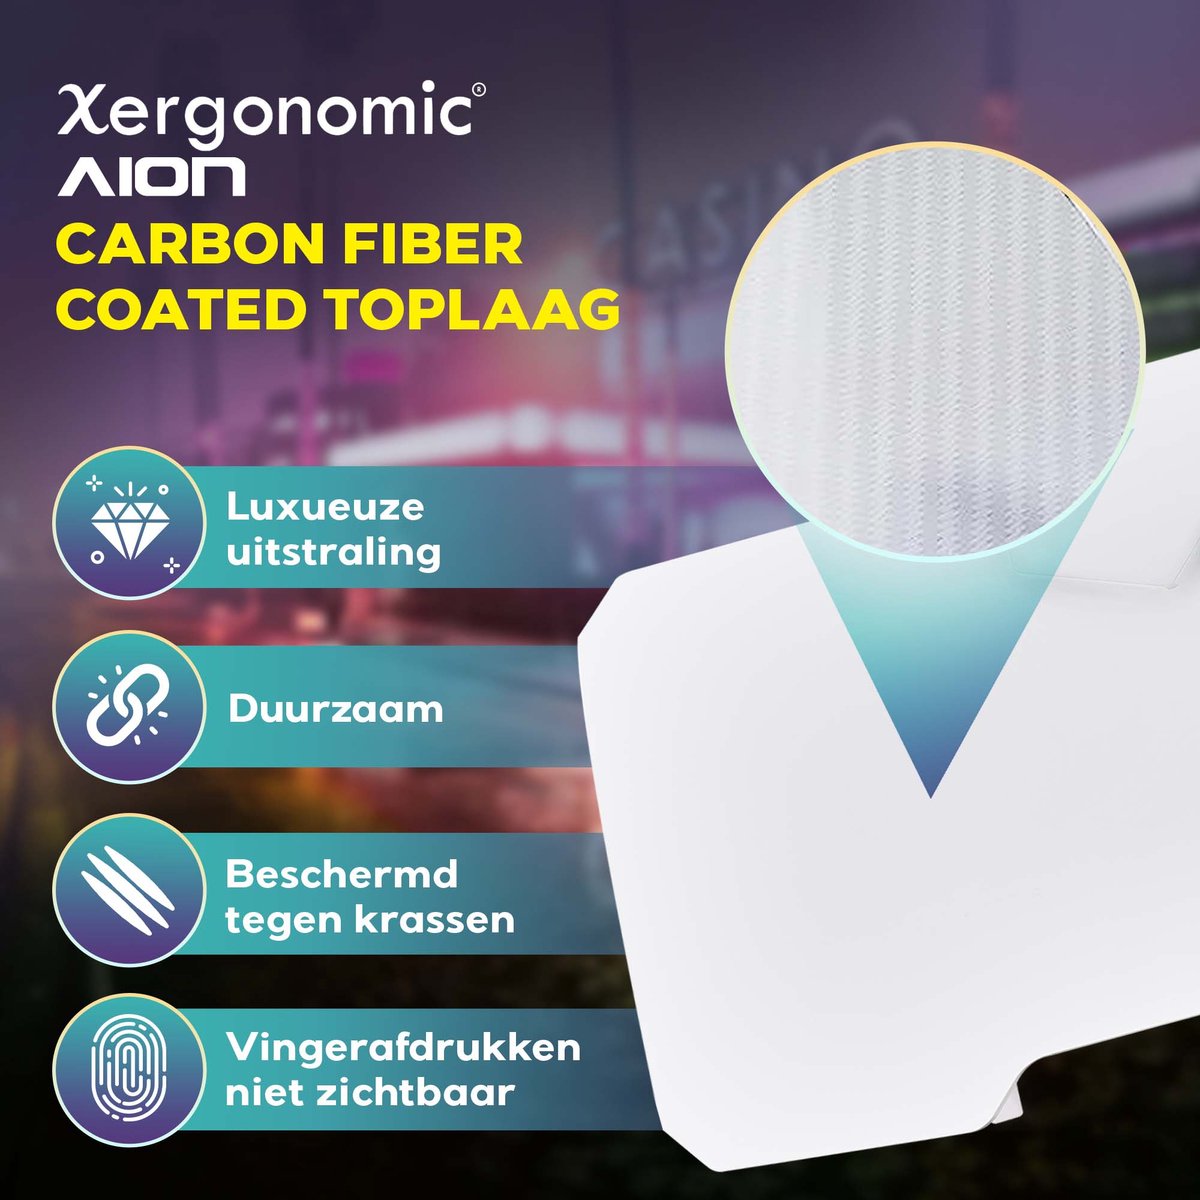 Tweedekans Xergonomic Morpheus Subzero Gaming bureau - Monitorstandaard - Carbon Fiber Coated Toplaag - 160cm- Wit